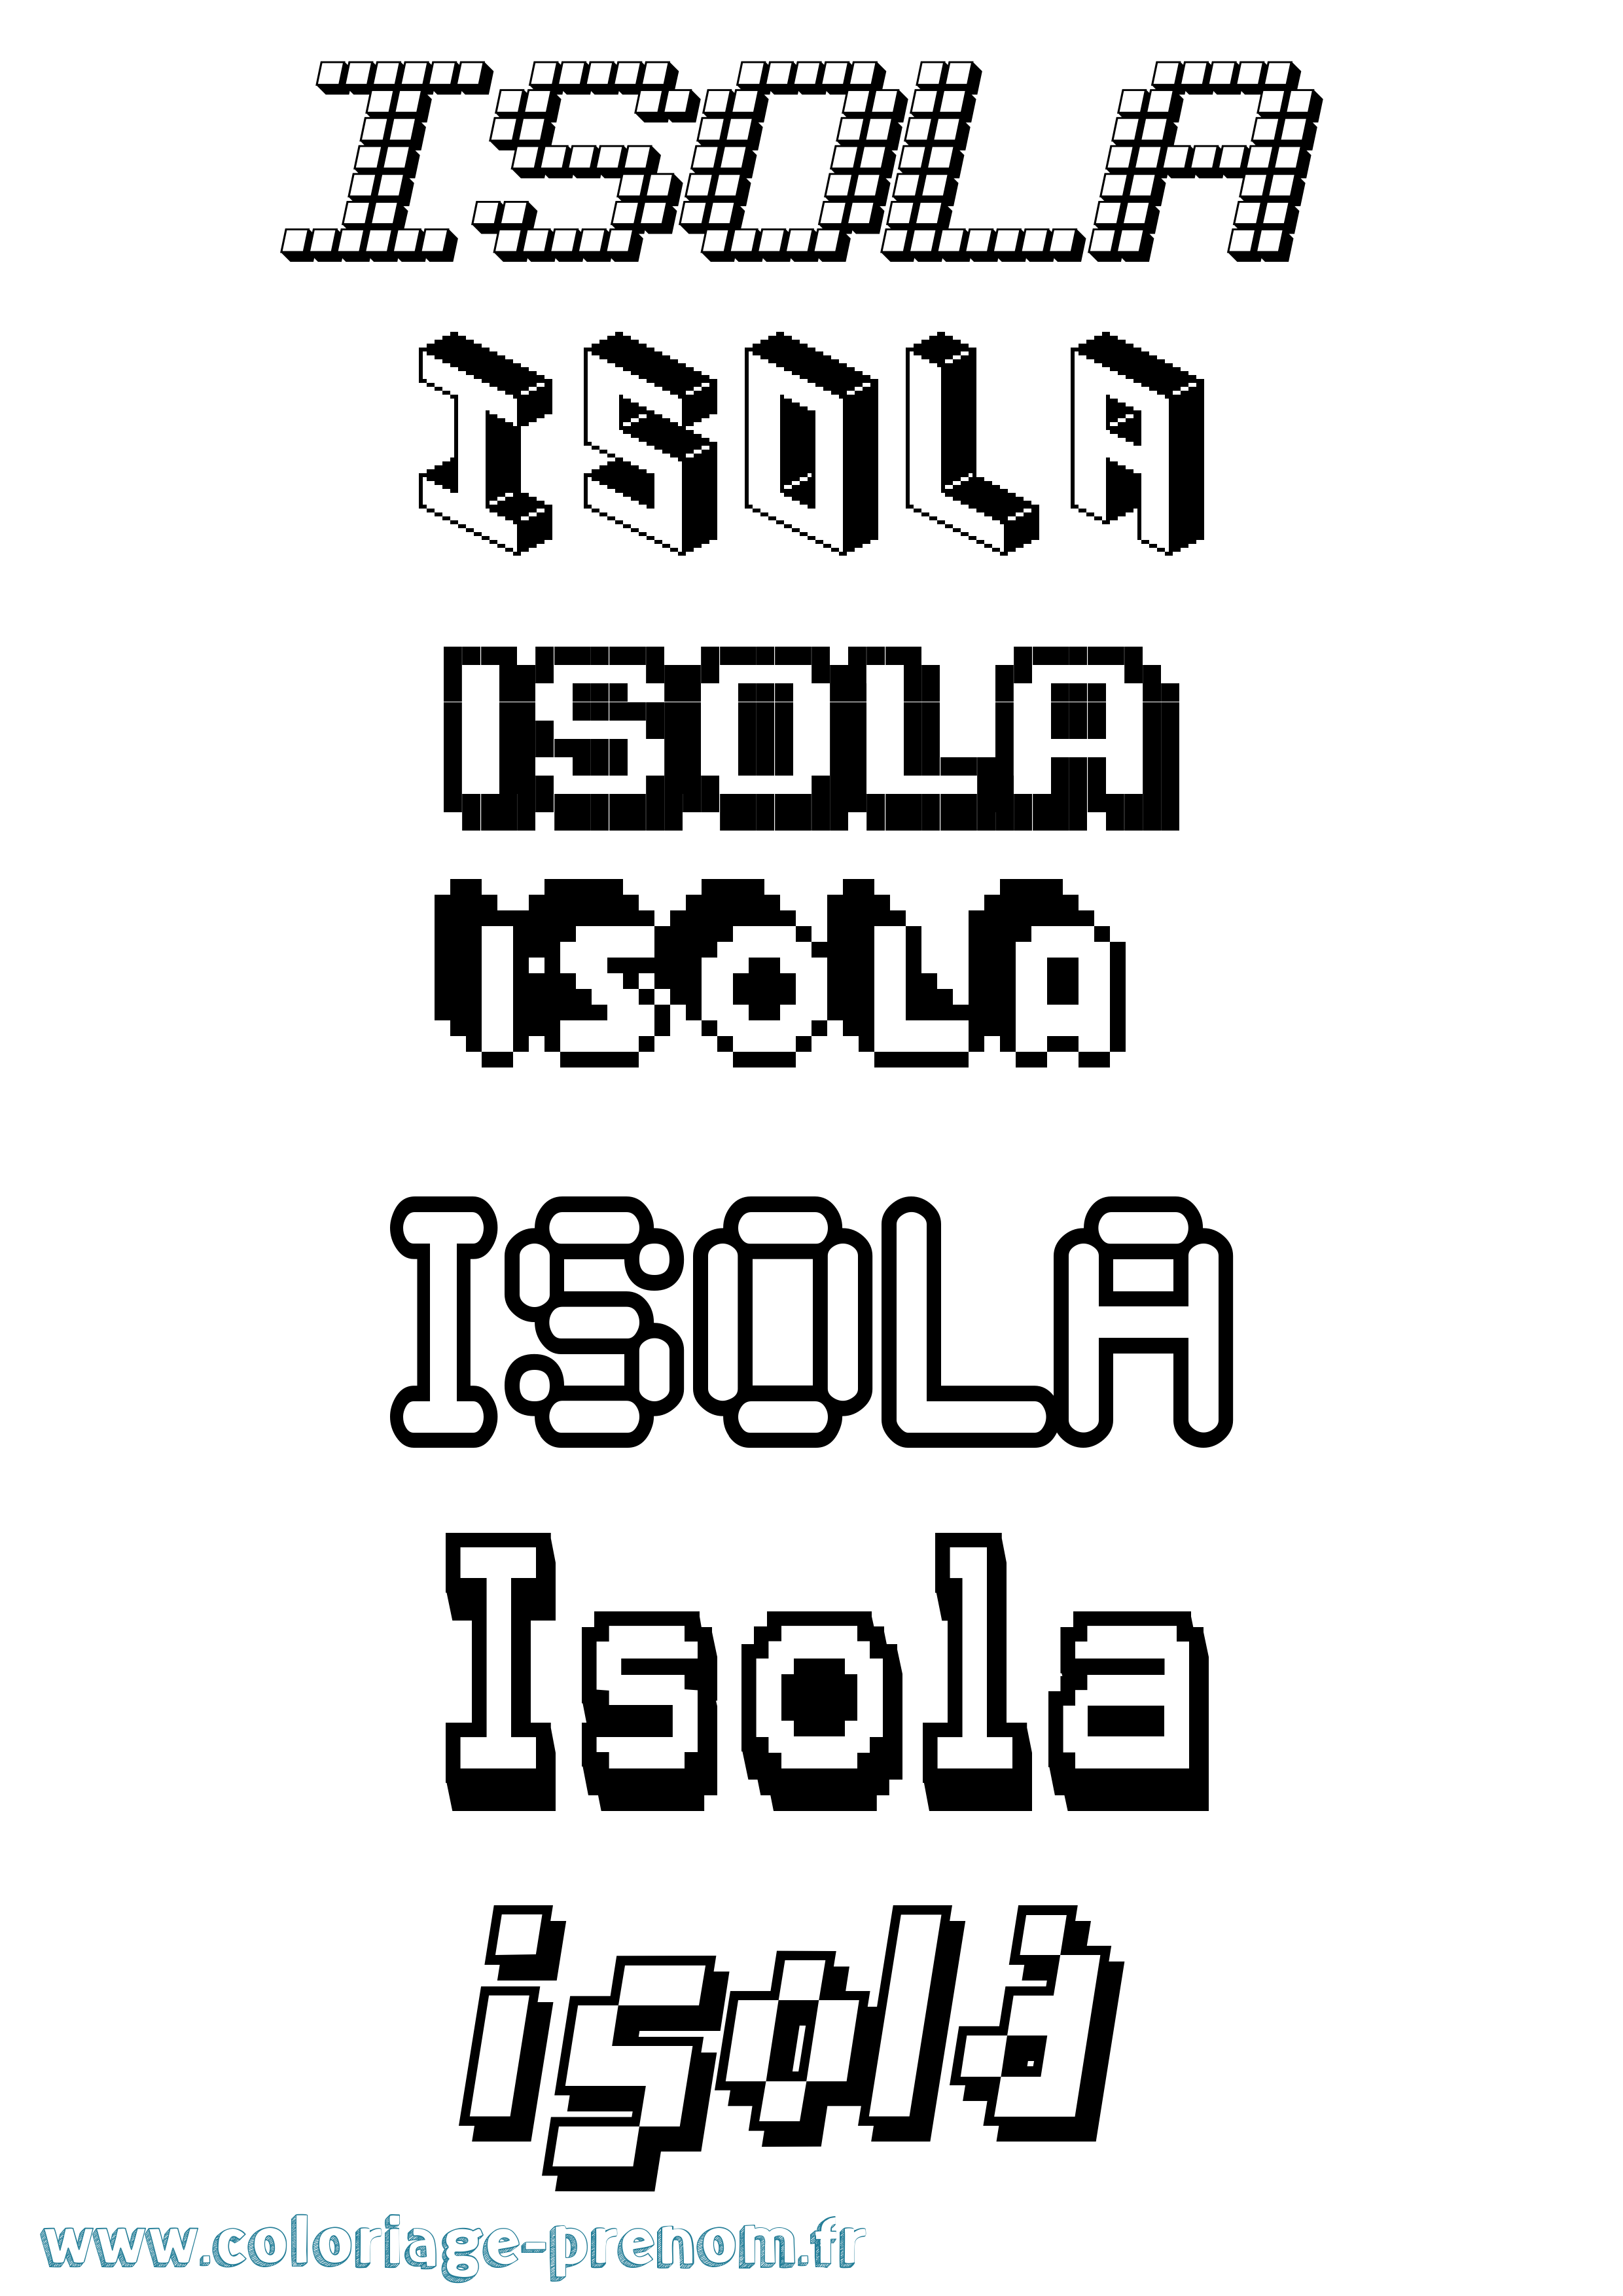 Coloriage prénom Isola Pixel